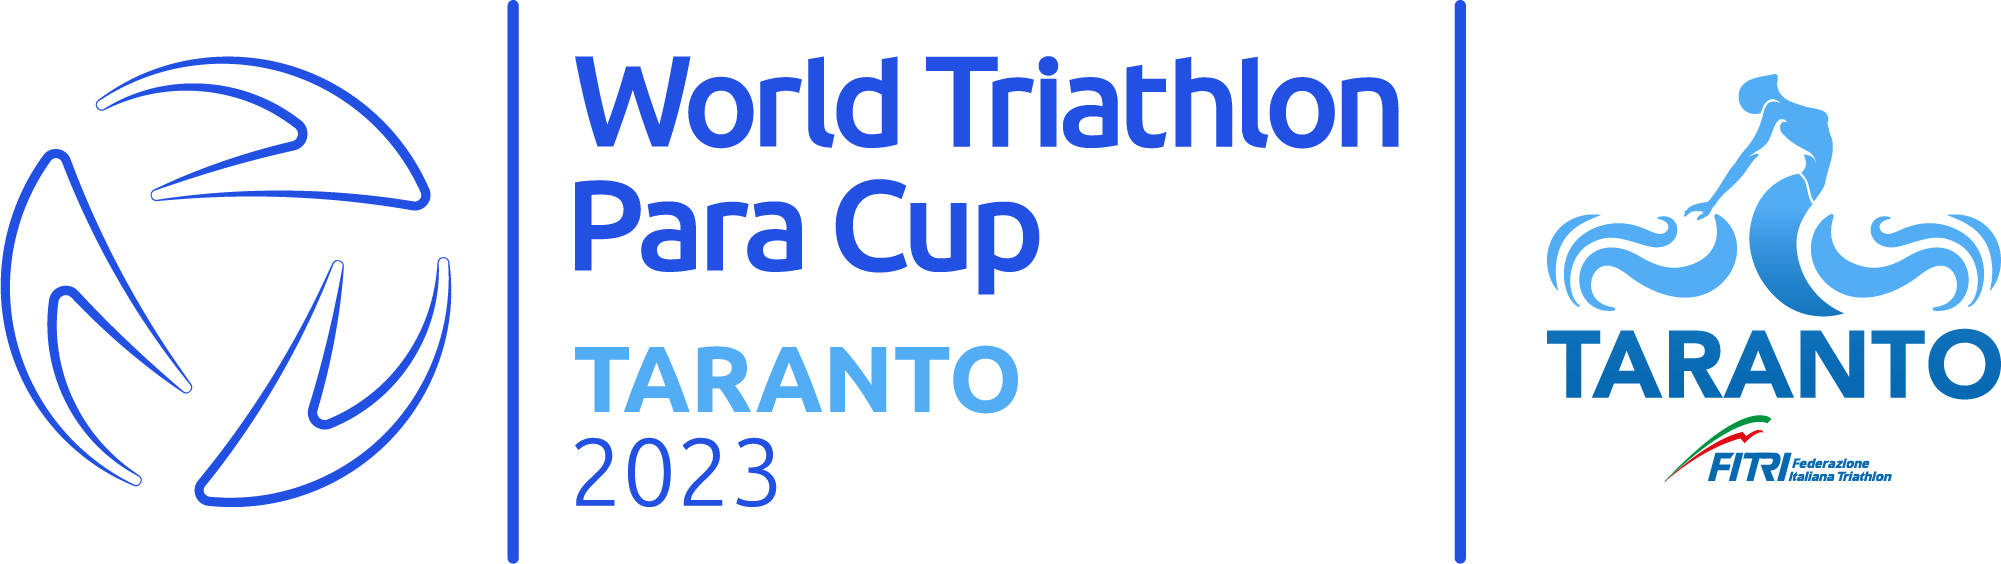 Live Streaming - World Triathlon Para Cup